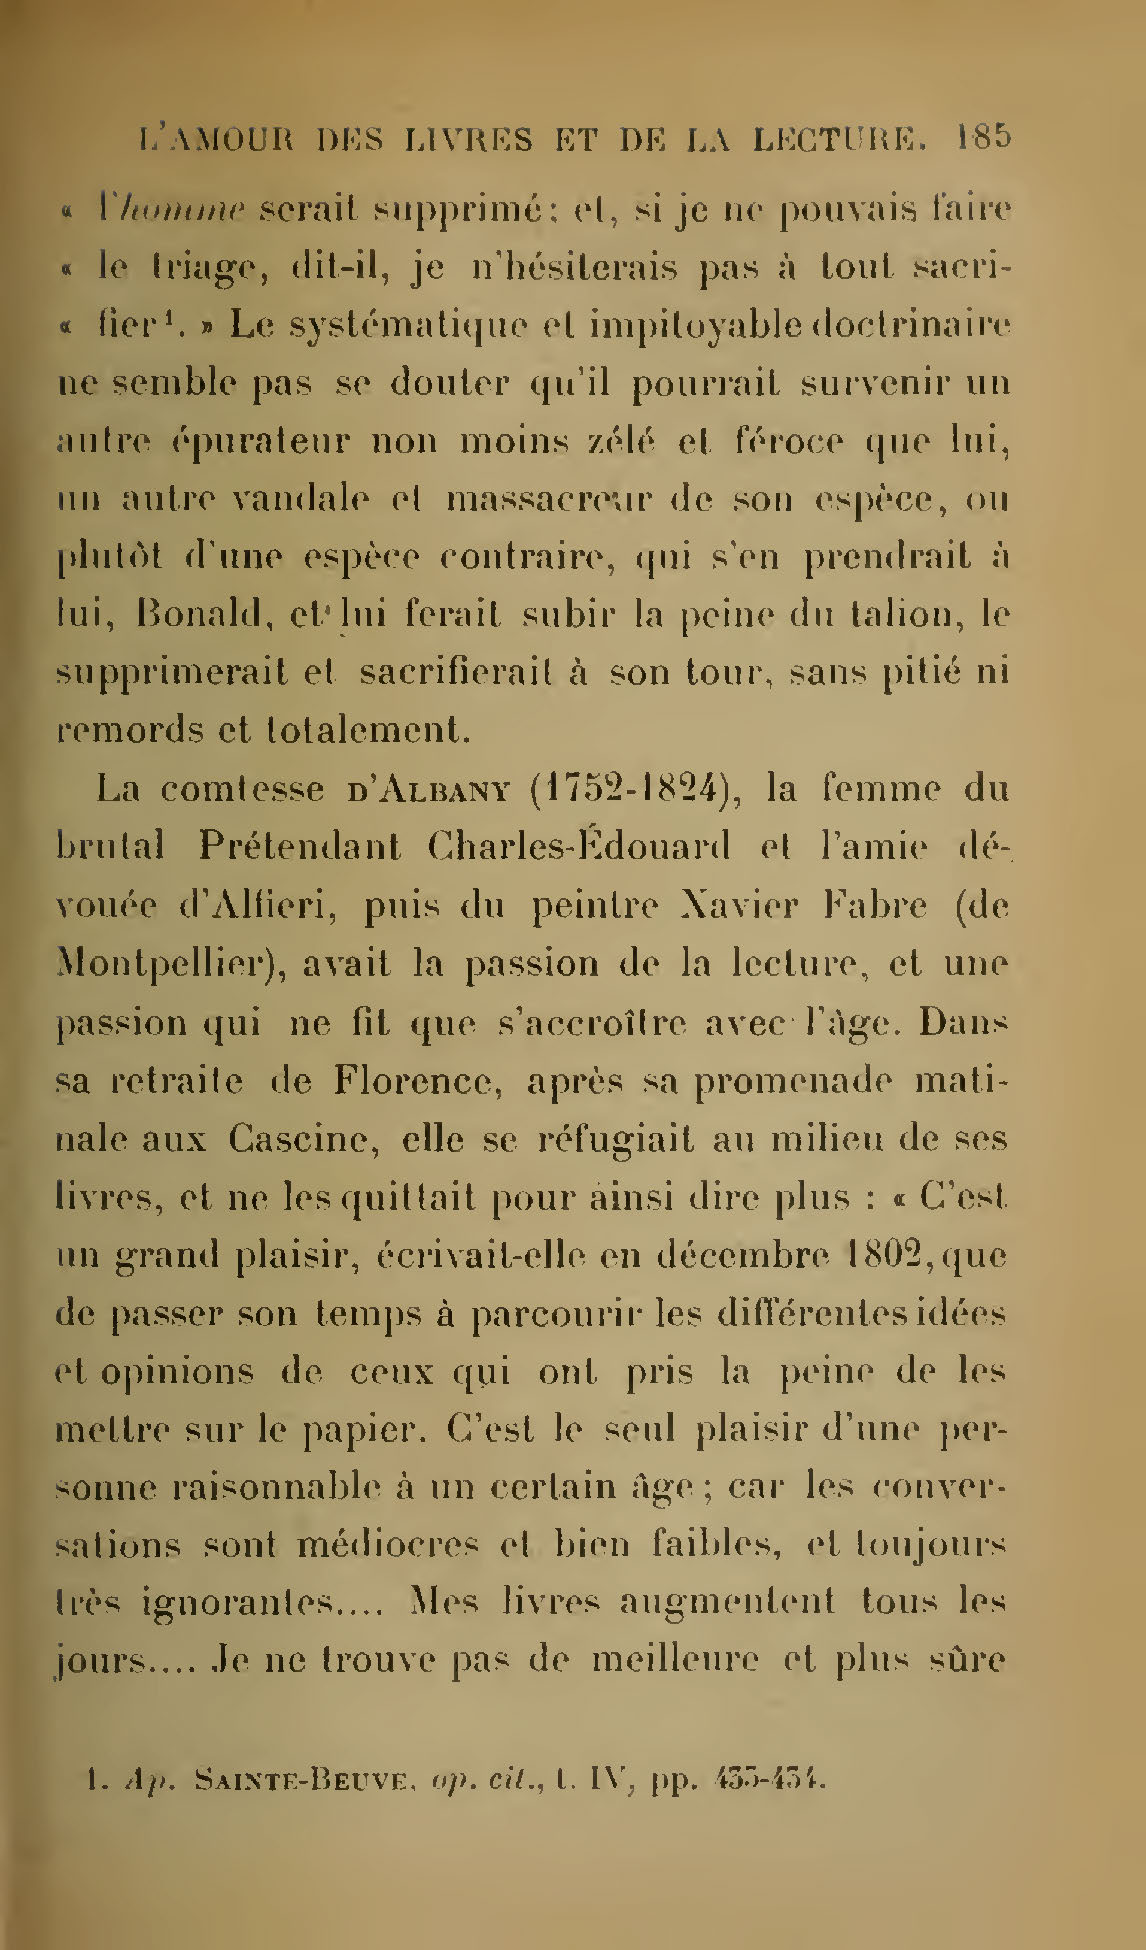 Albert Cim, Le Livre, t. I, p. 185.